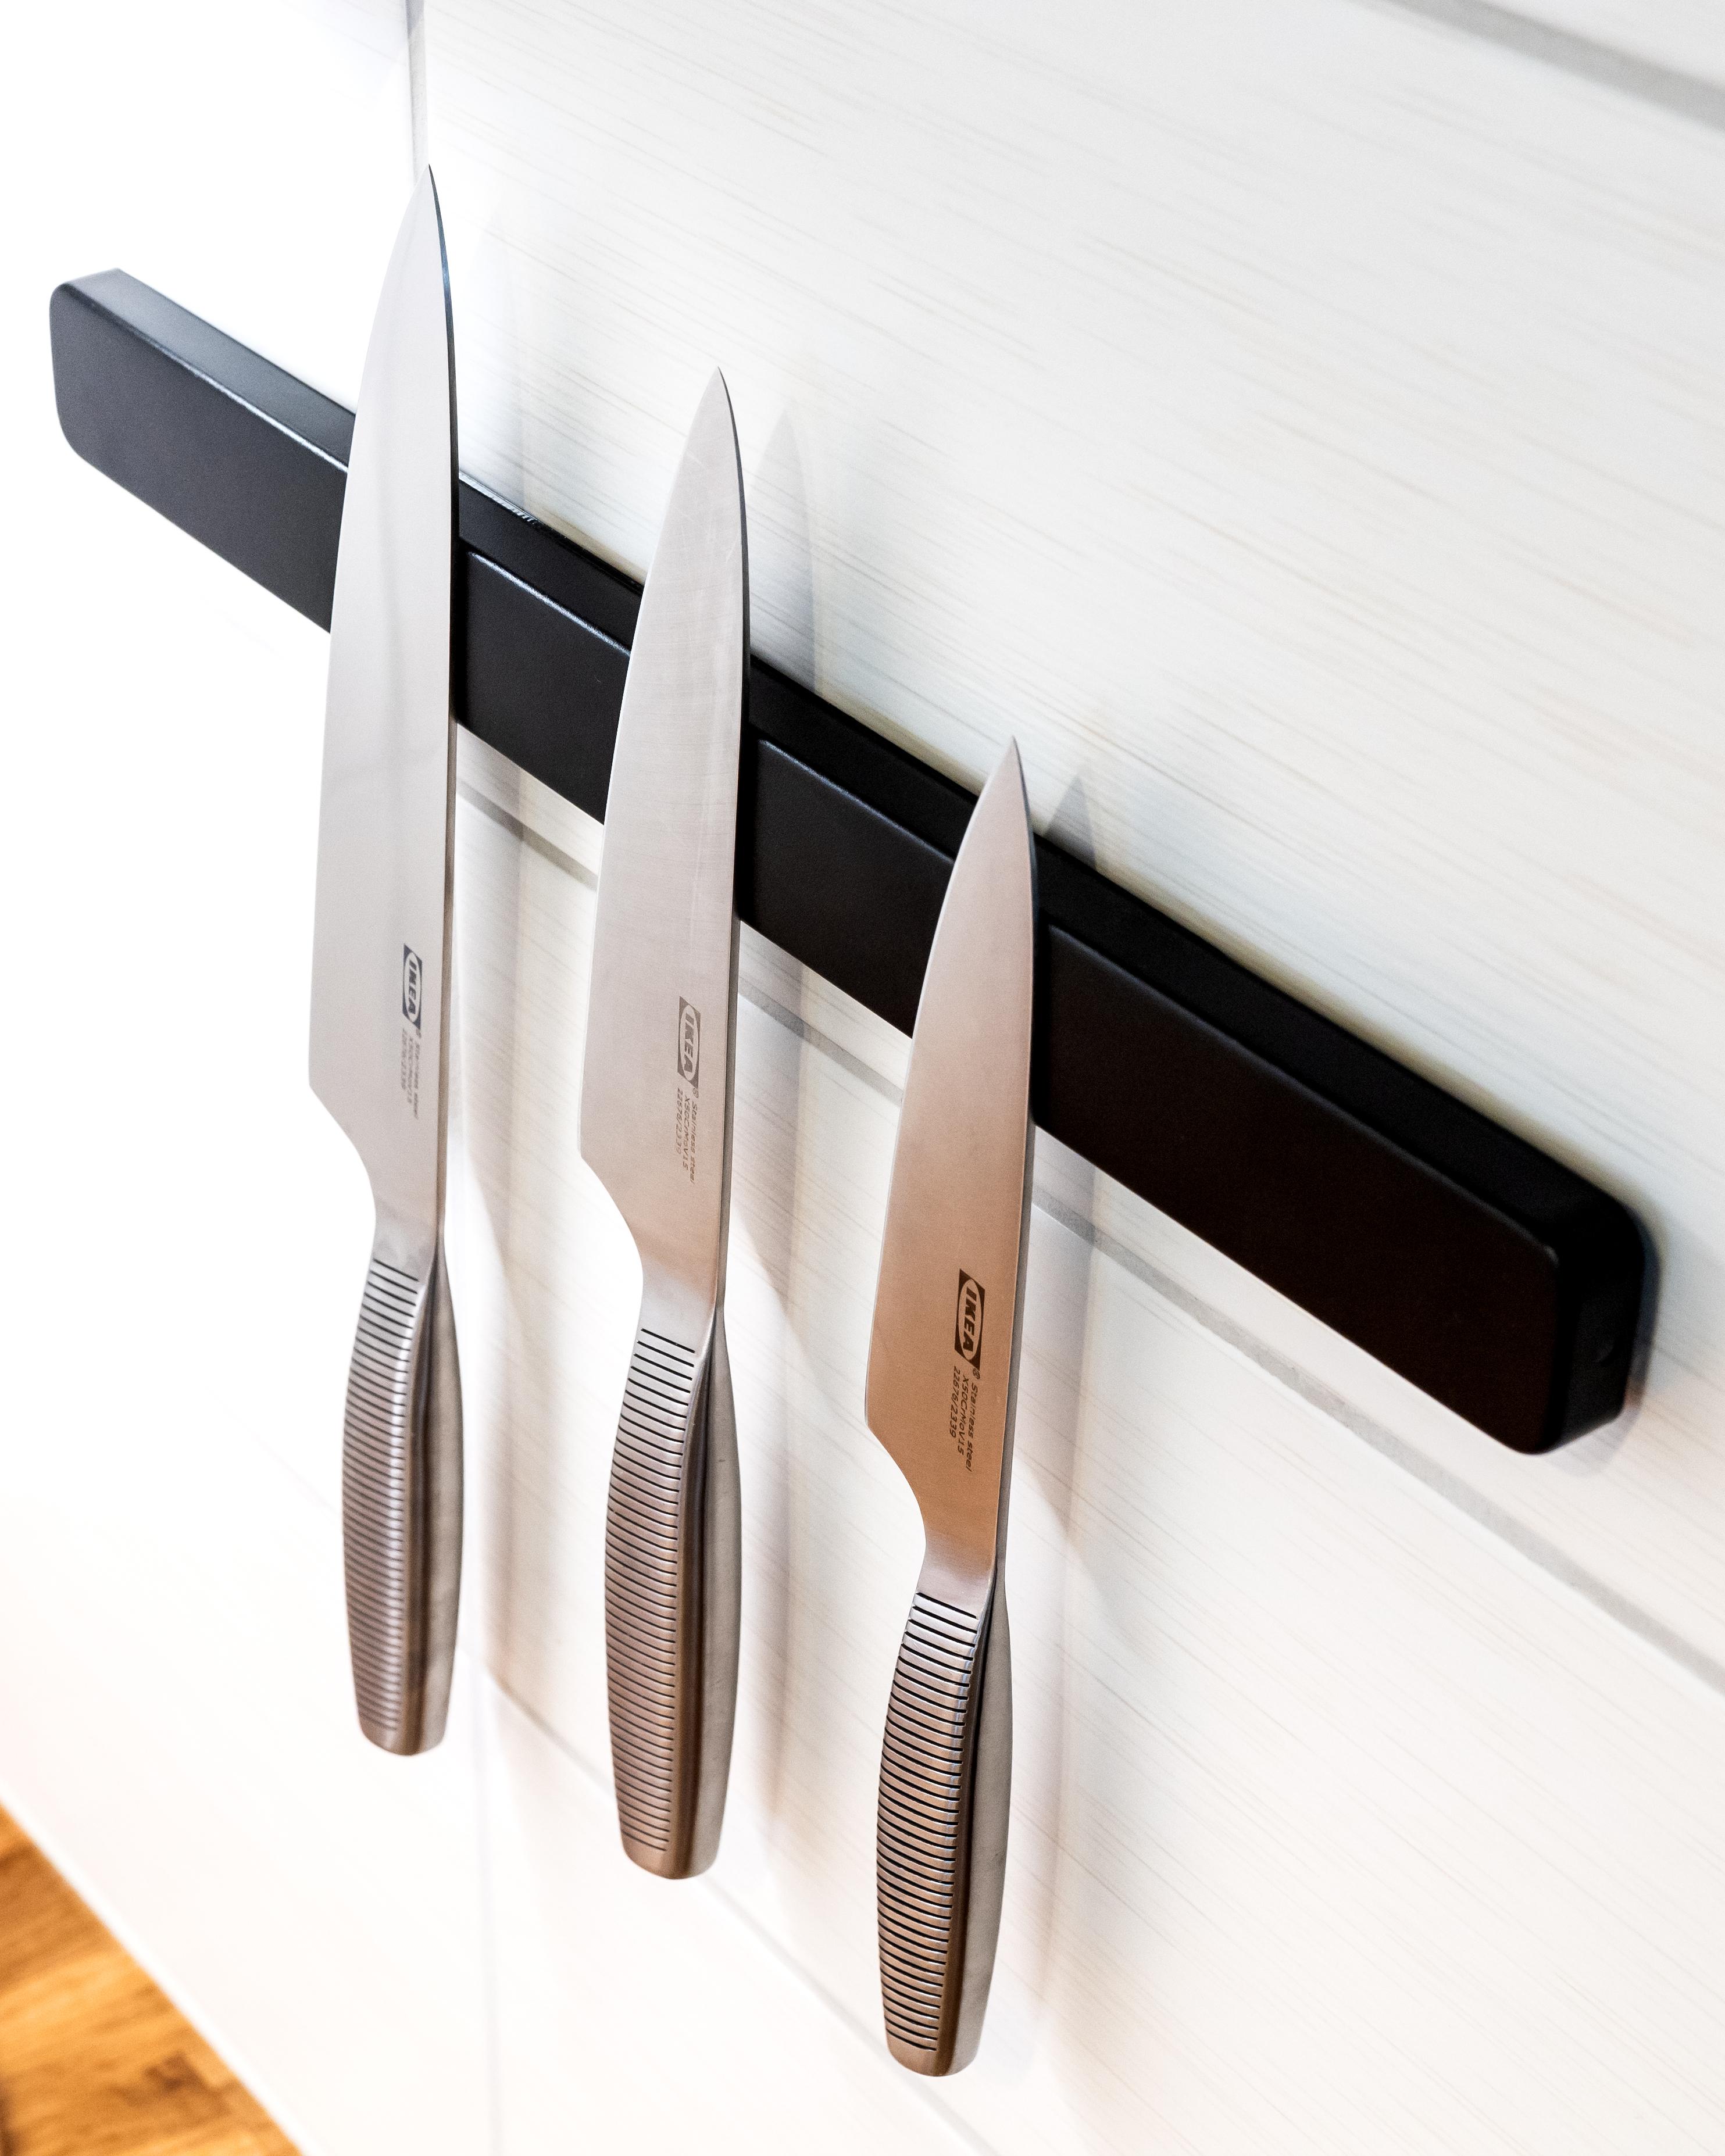 Screwless Mod for IKEA HULTARP Knife Rack 3d model